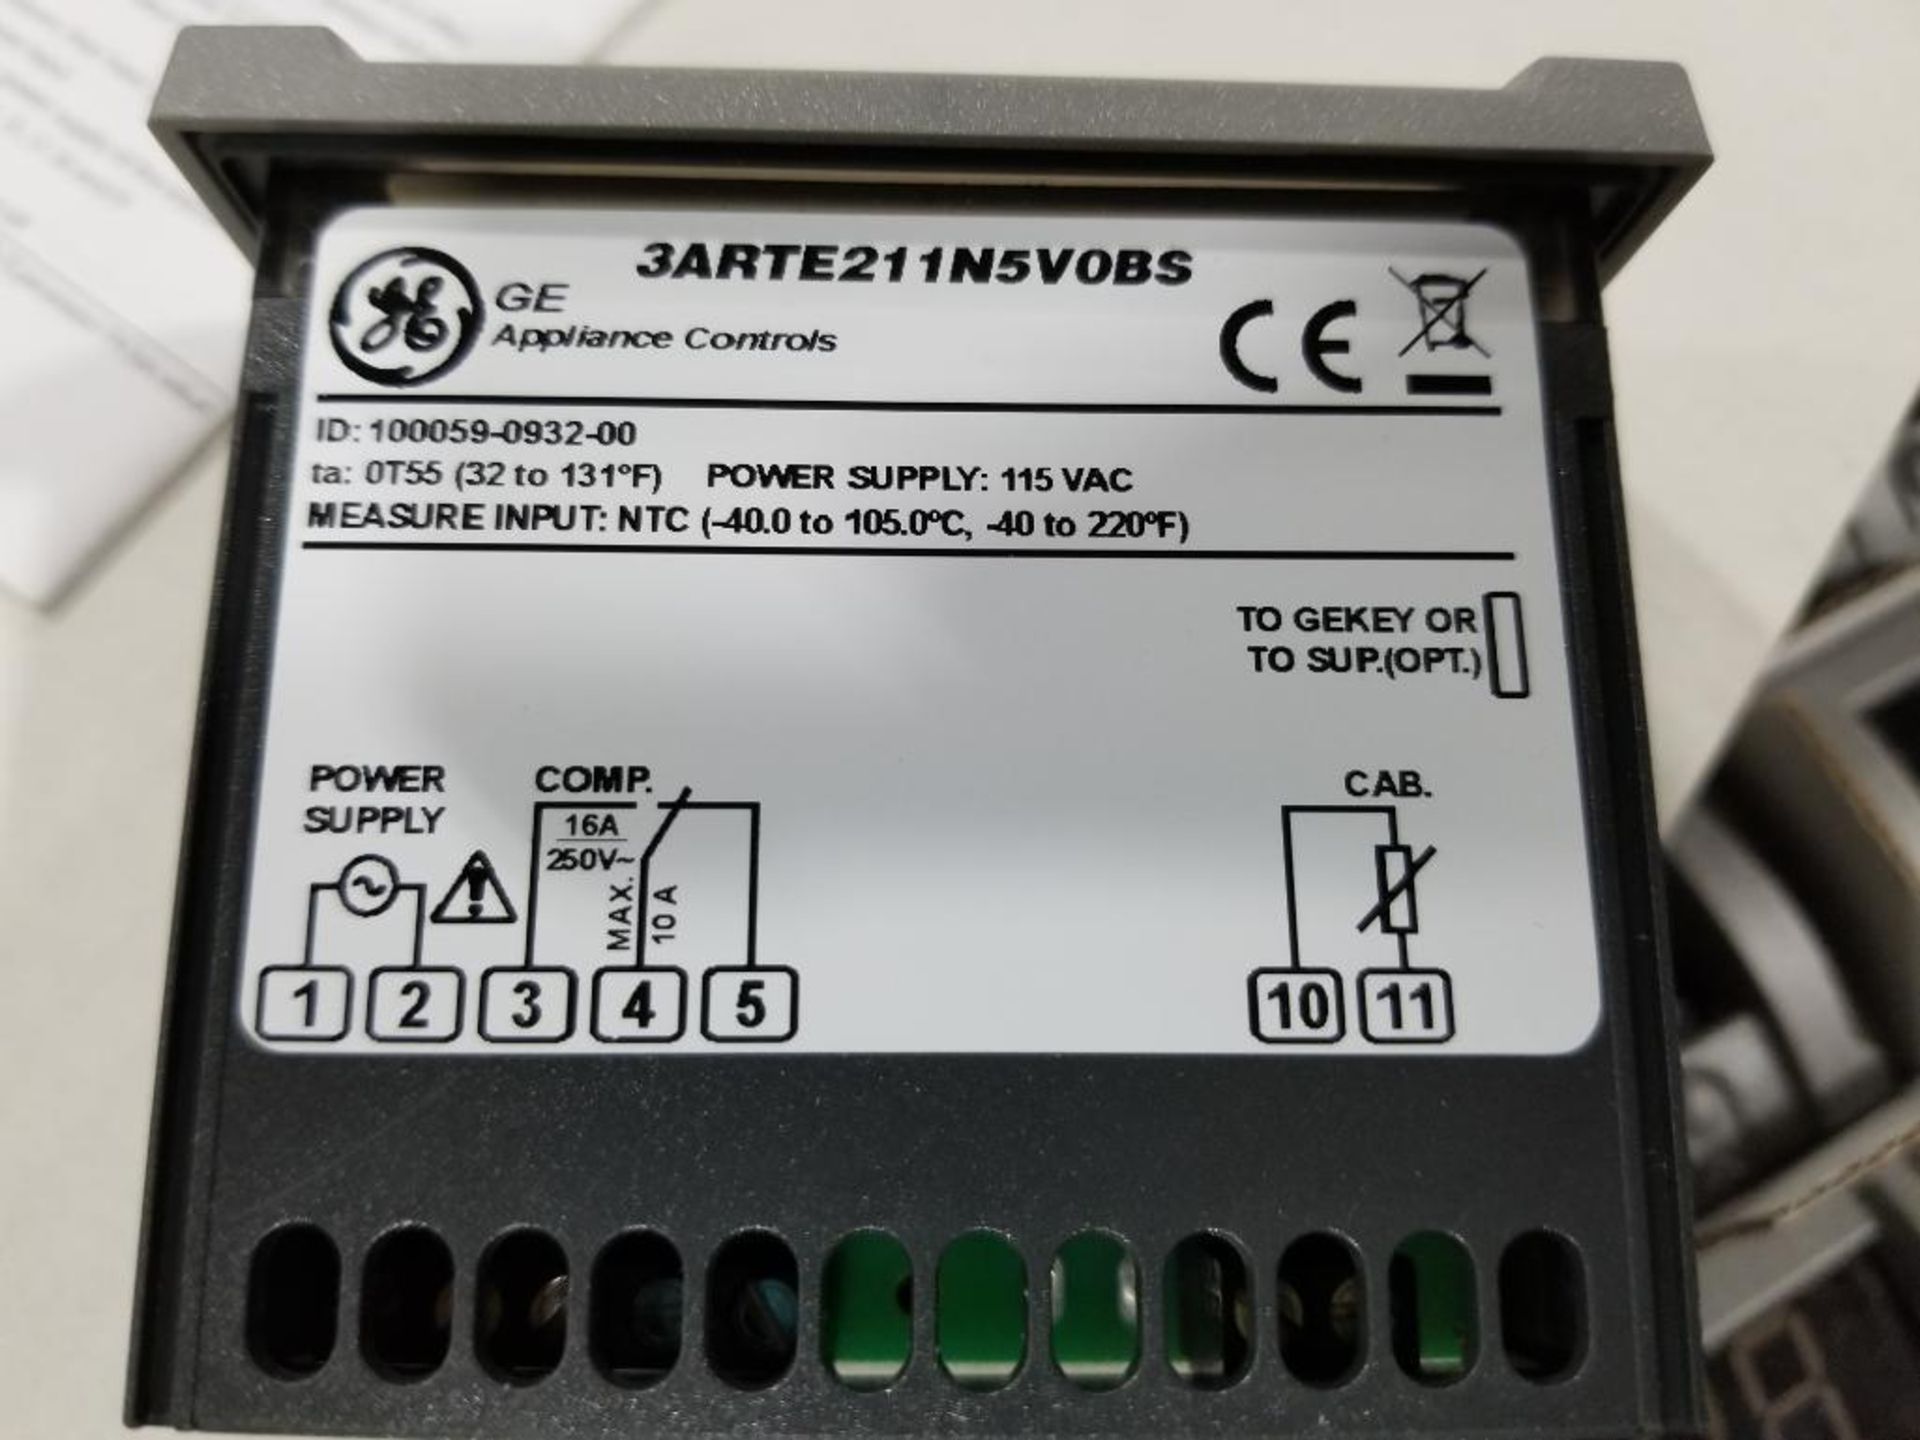 Qty 20 - GE electrical controller. Part number 3ARTE251N5V0BS. - Image 6 of 6